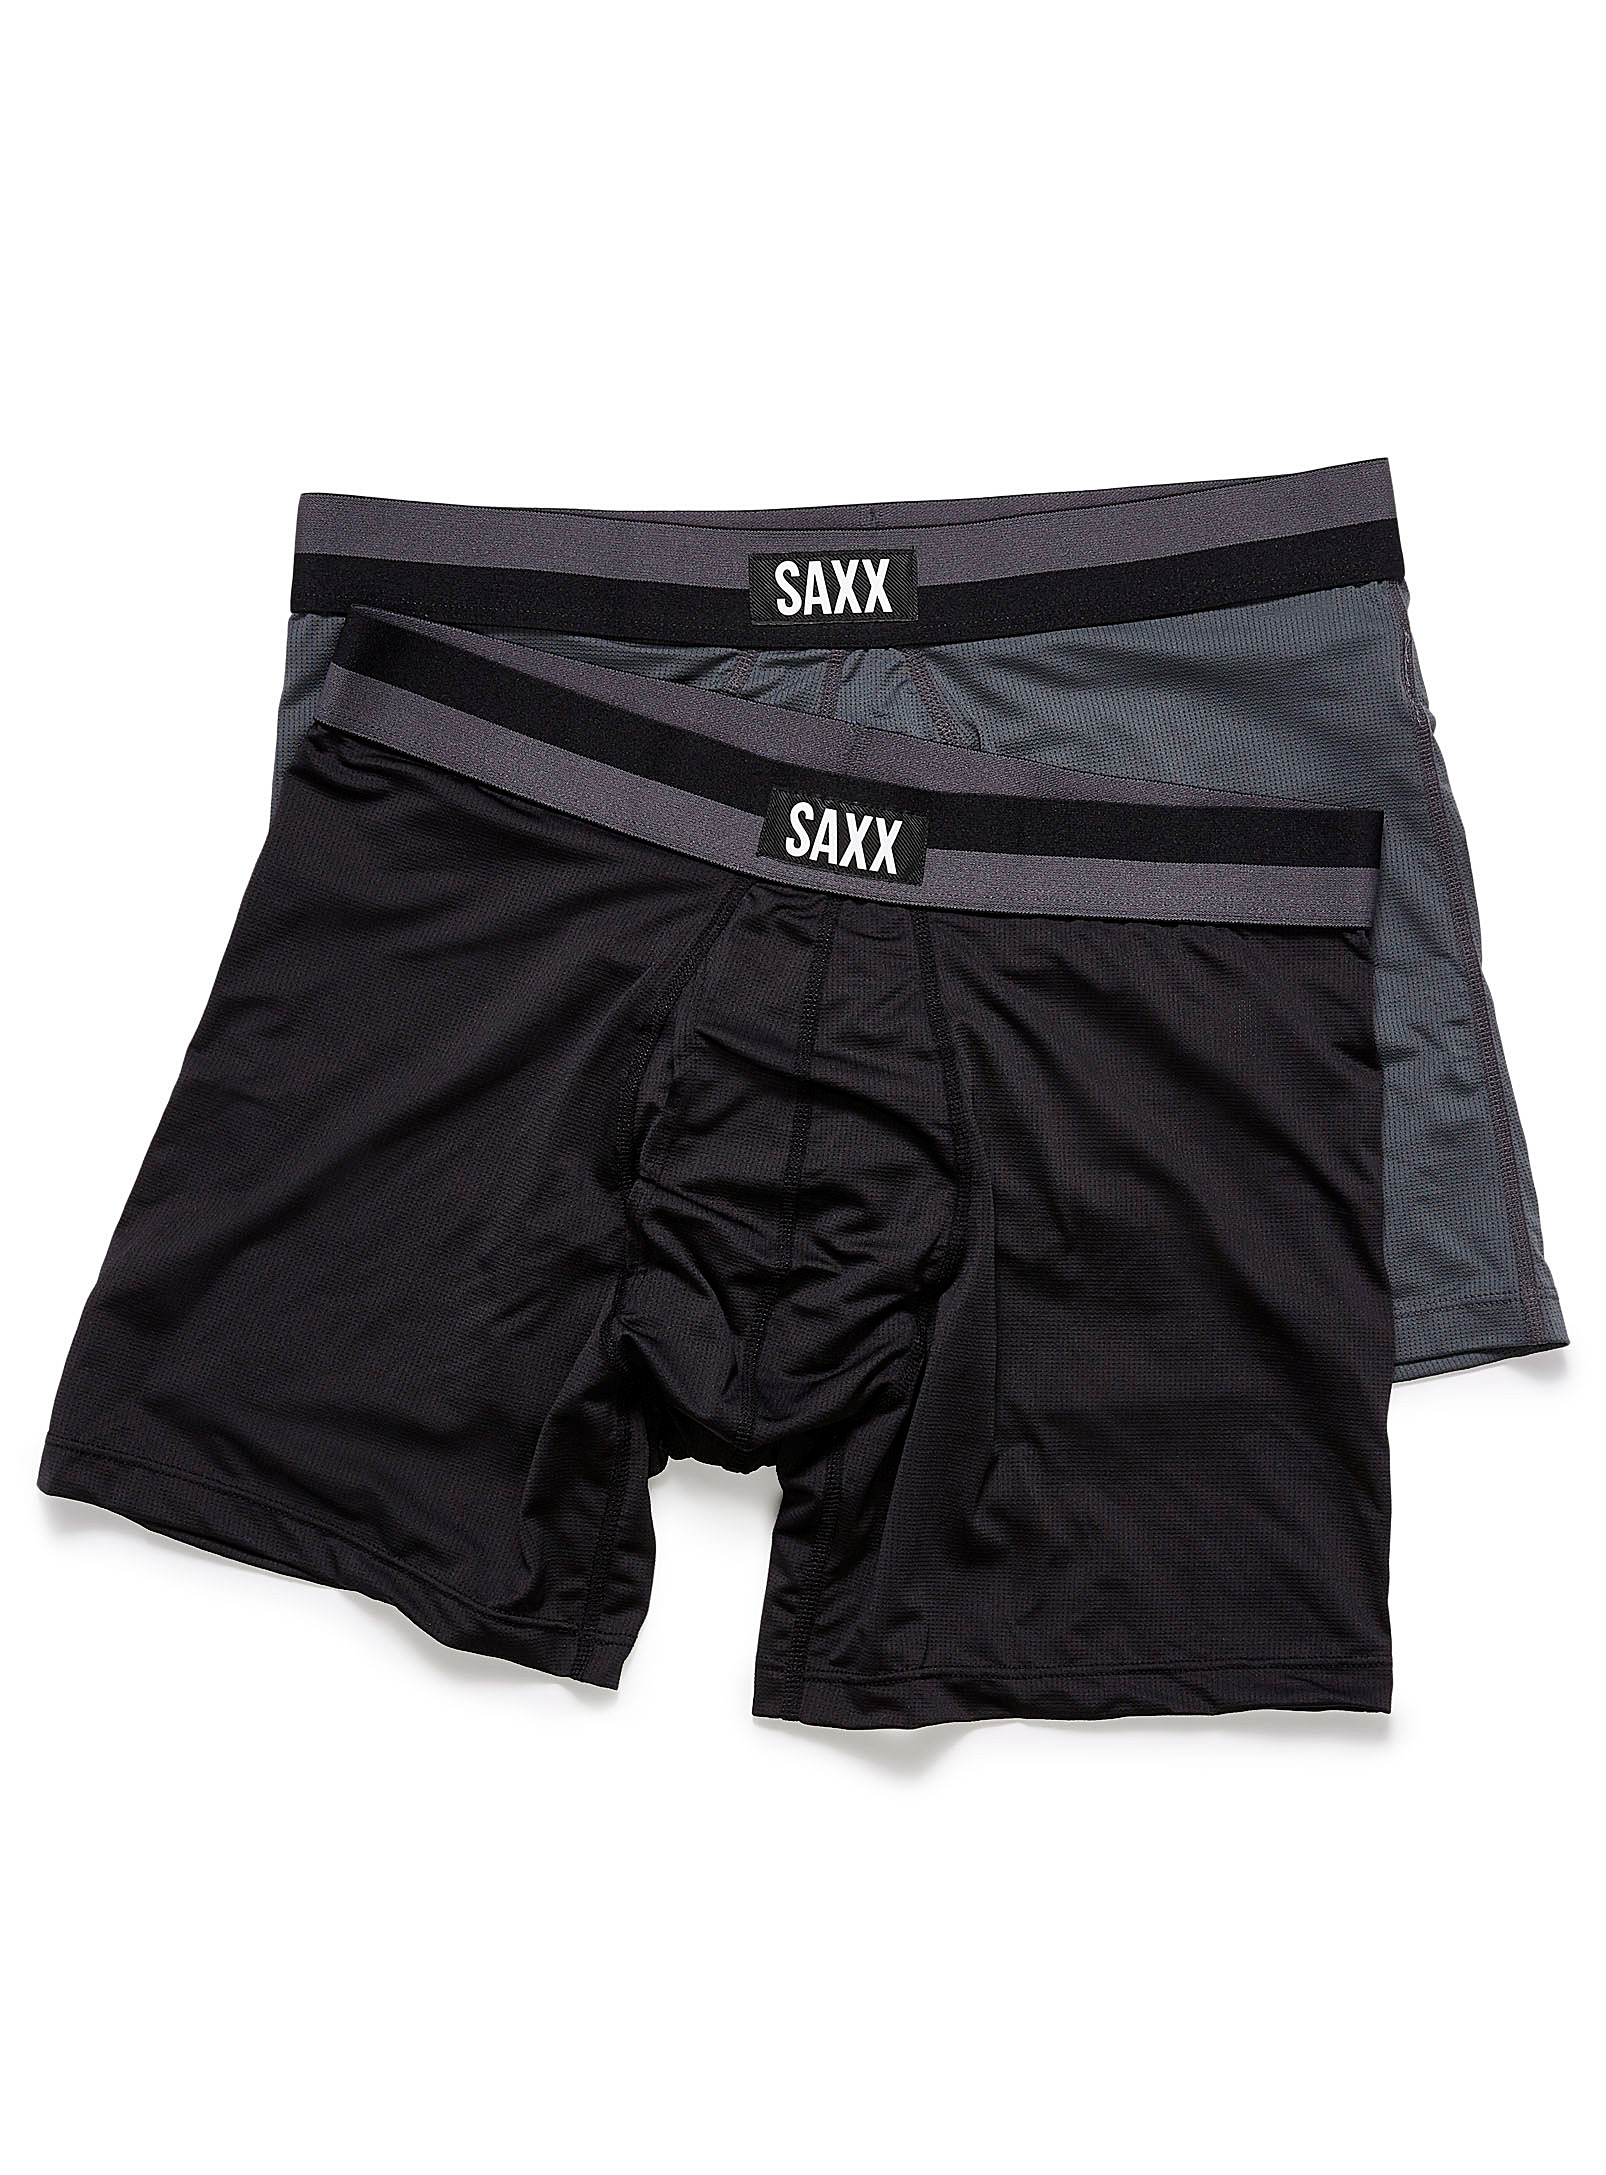 Saxx 2-pack In Black